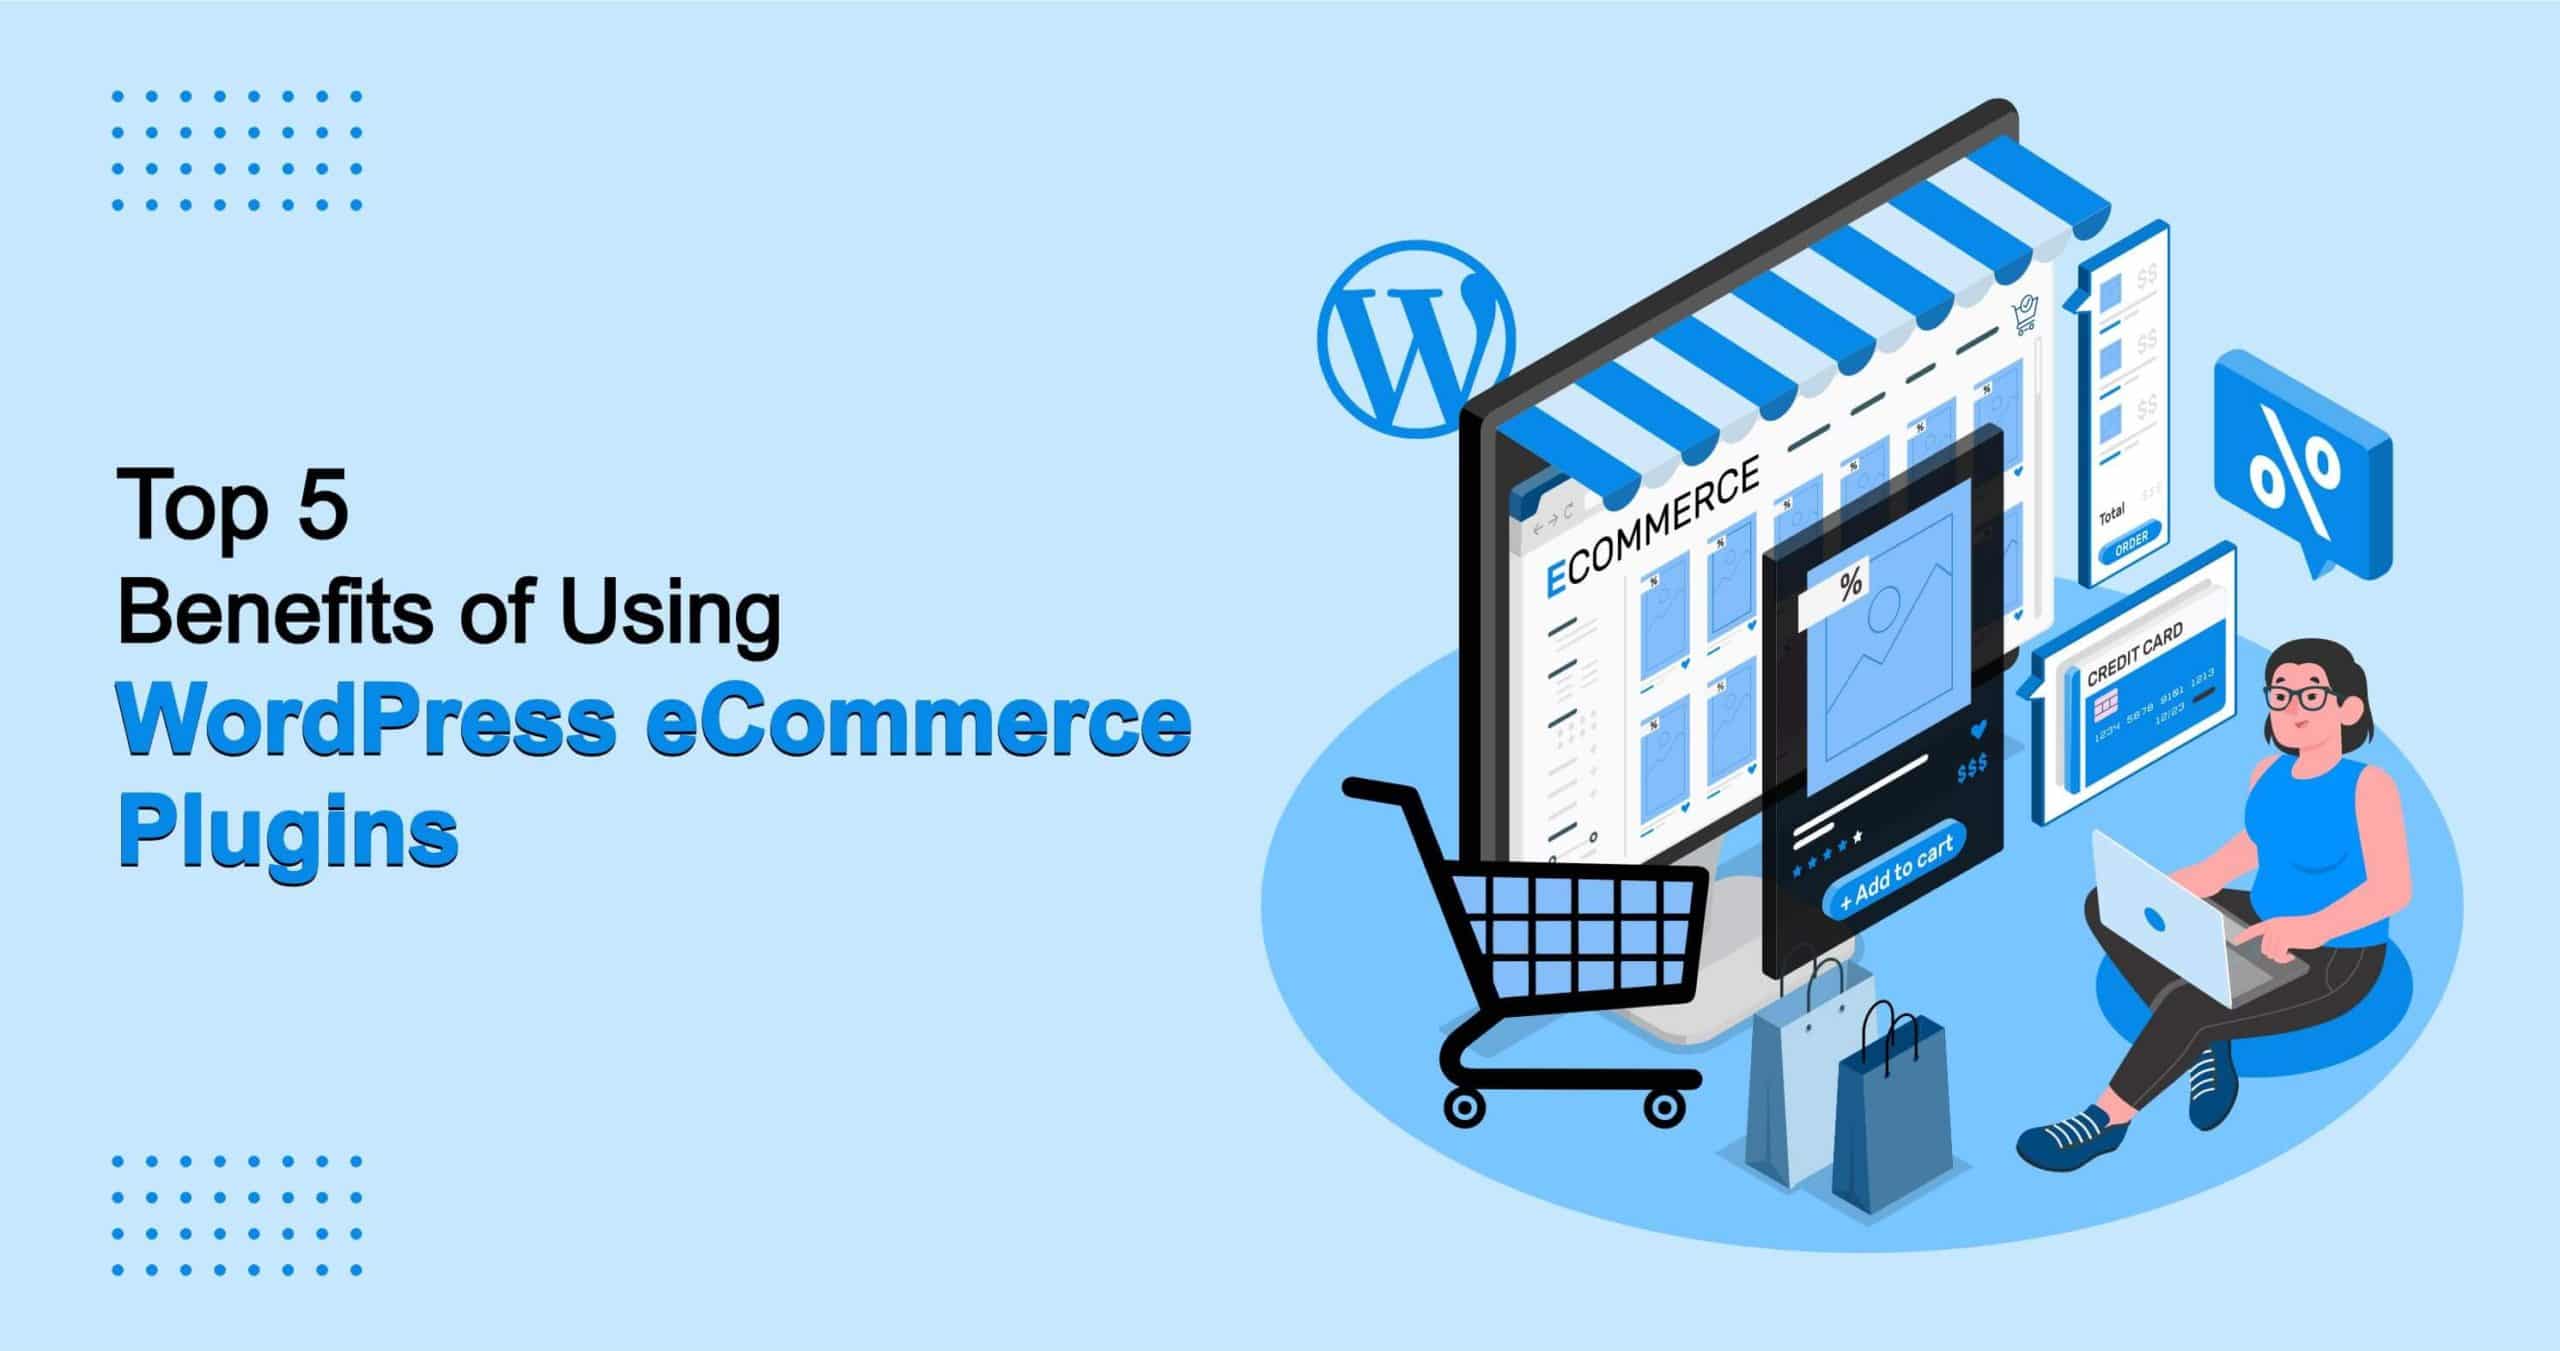 Top 5 Benefits of Using WordPress eCommerce Plugins